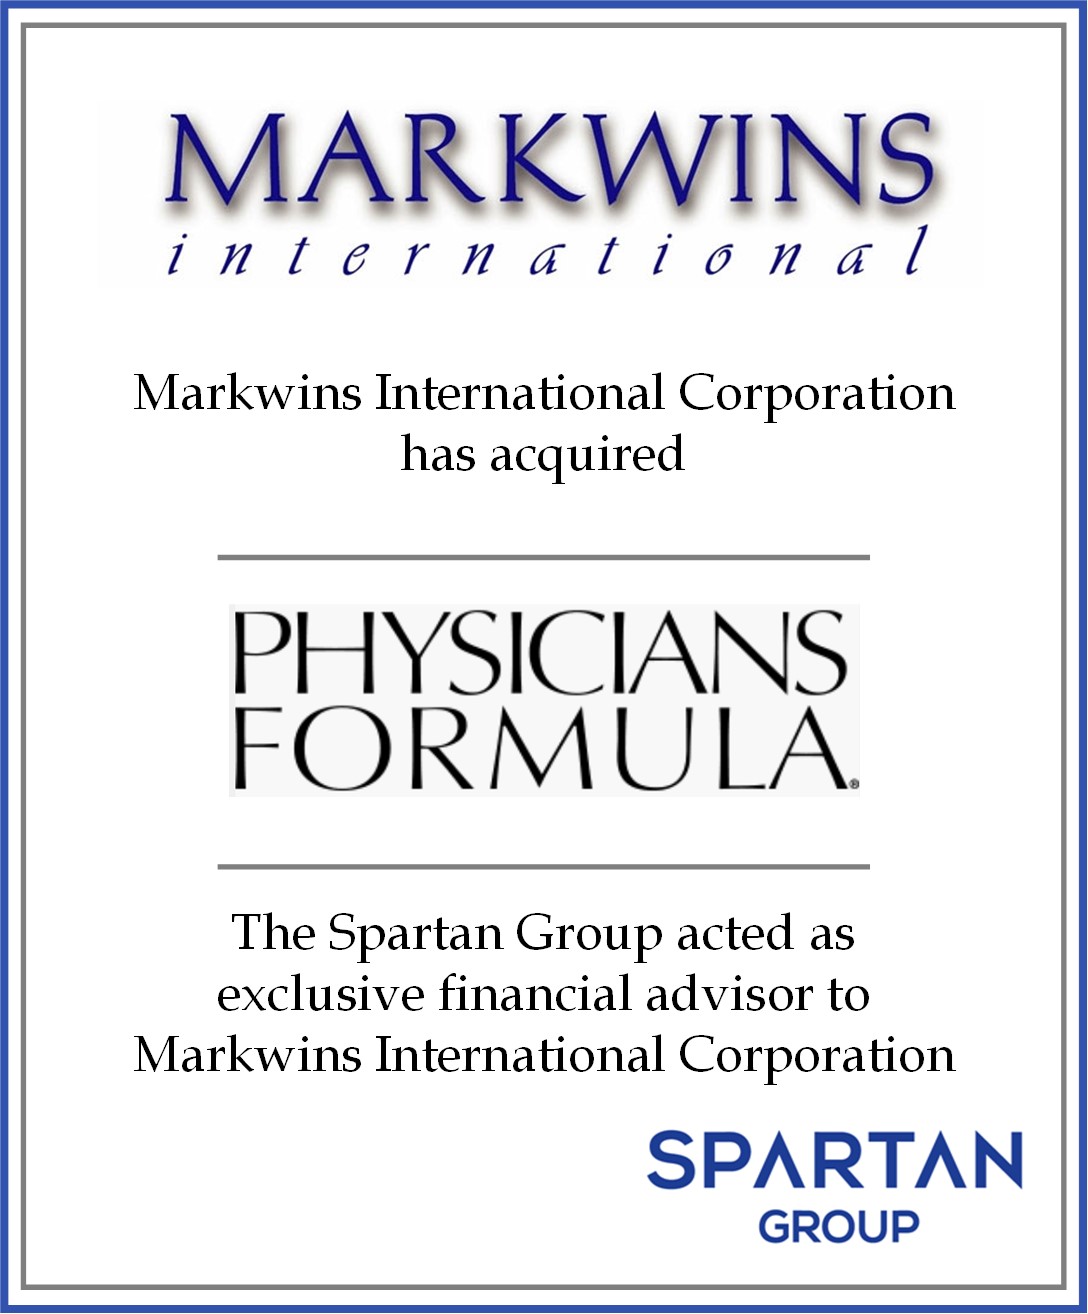 Markwins International Corporation